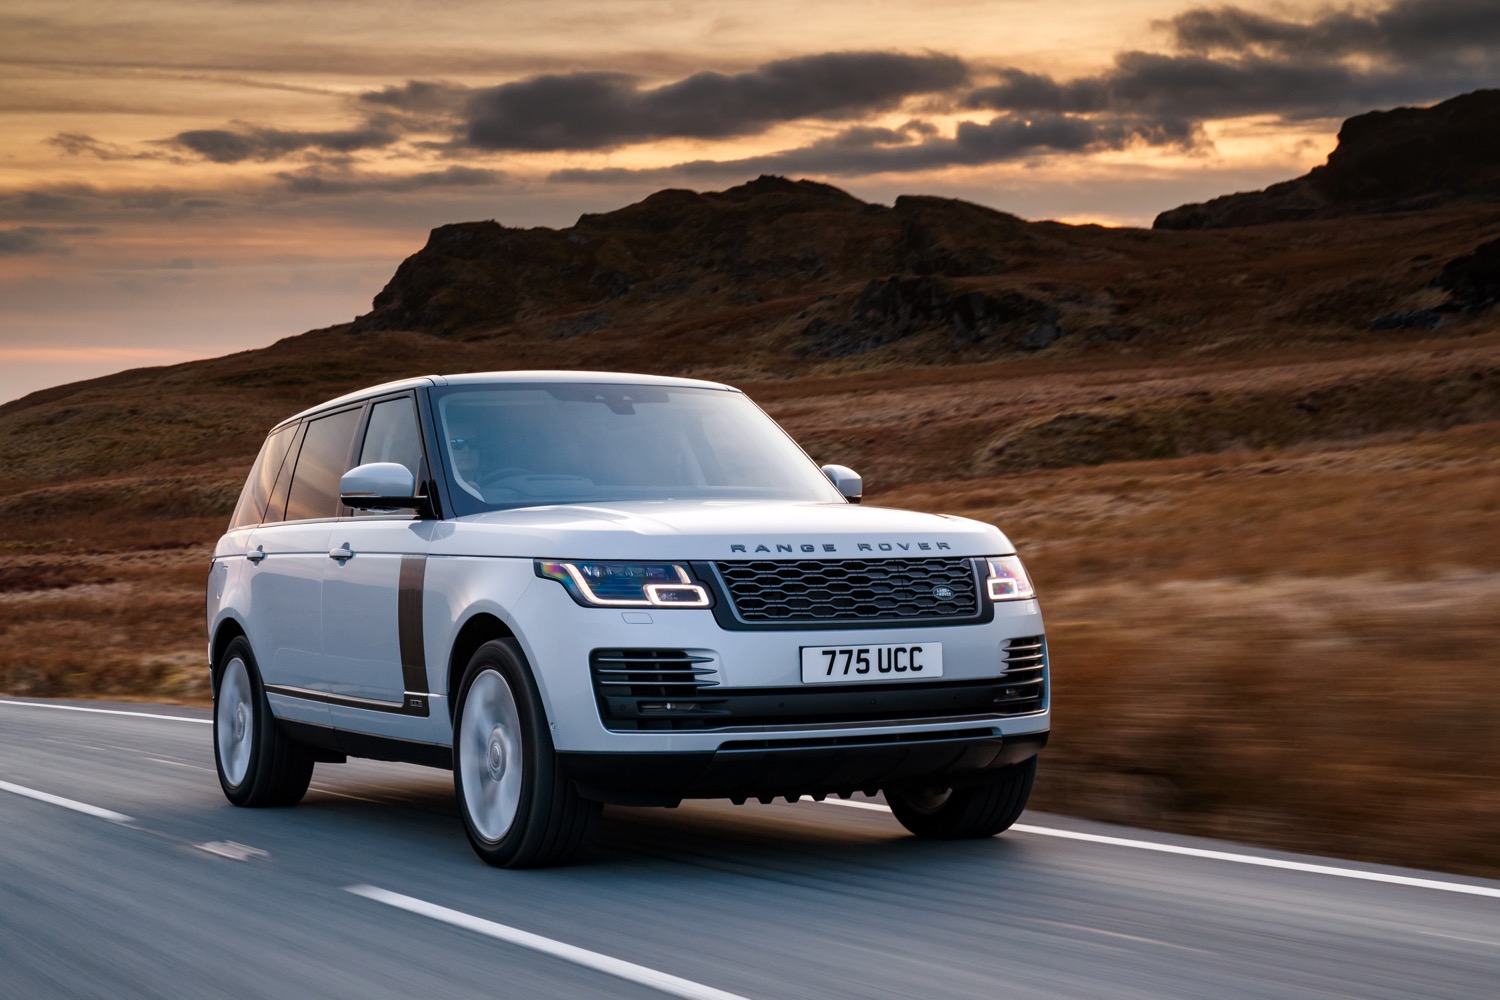 2019 Land Rover Range Rover Gets More Tech, PHEV Model | Digital Trends